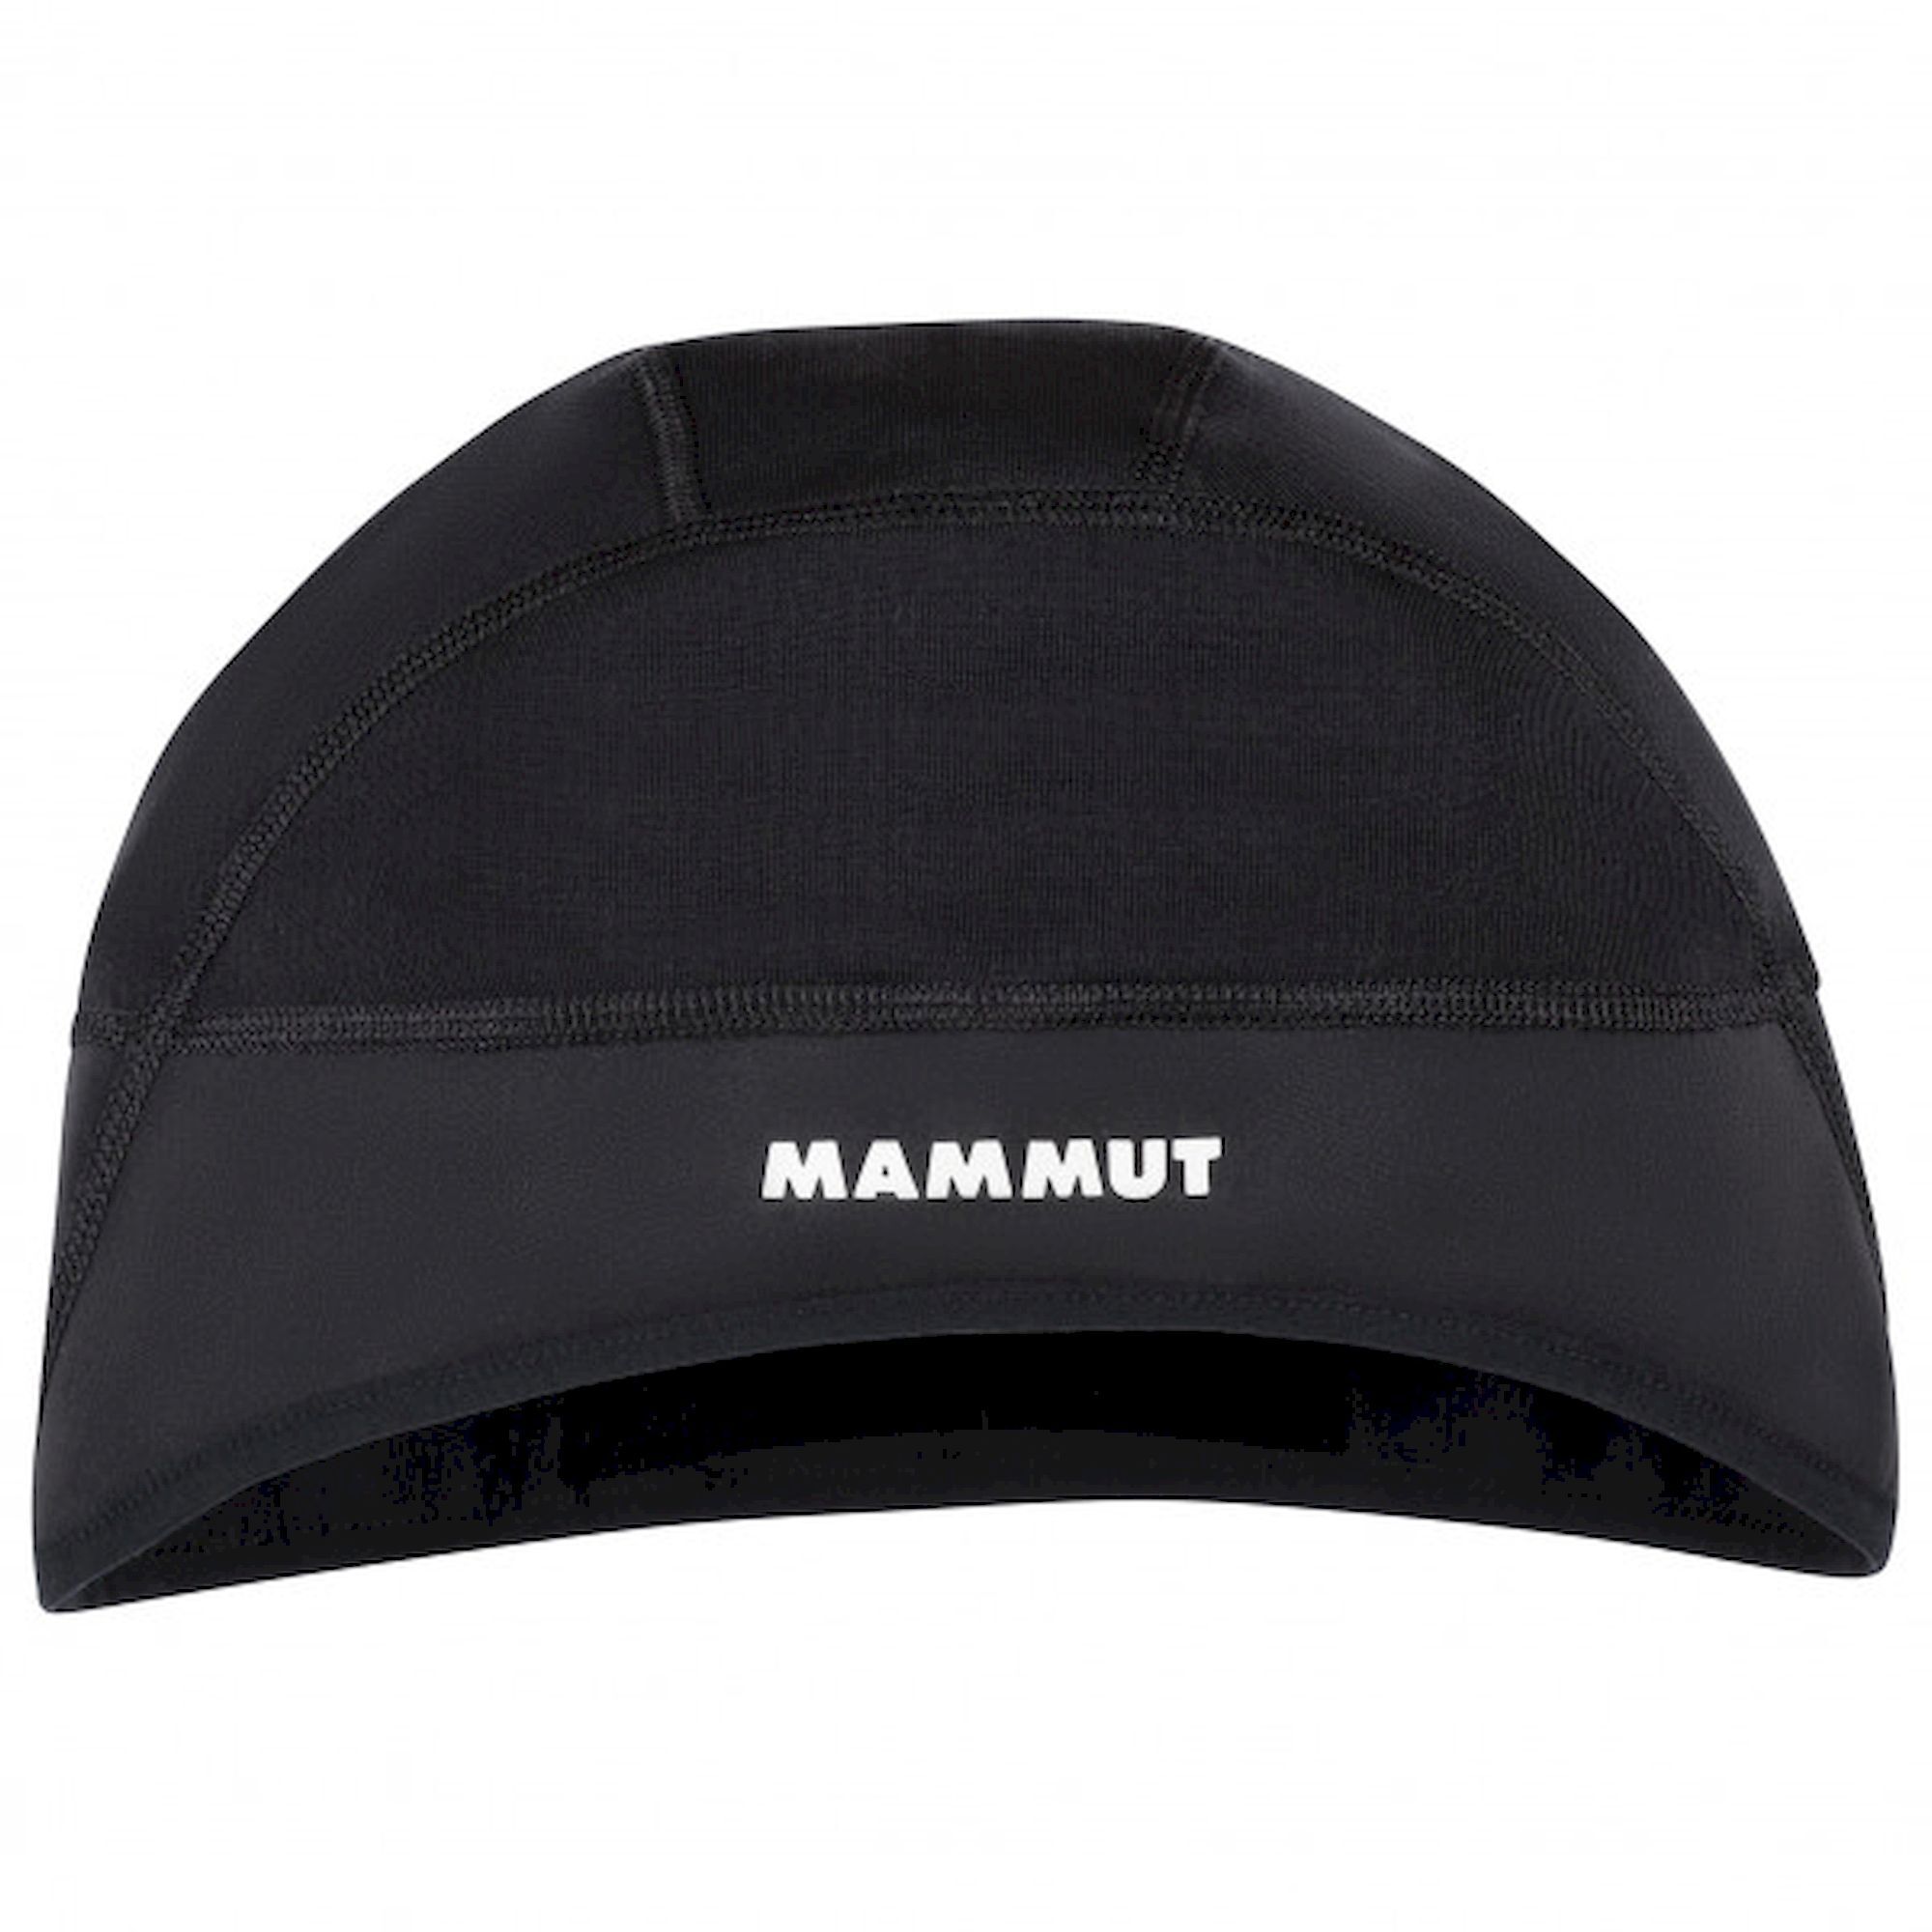 Mammut WS Helm Cap - Mössa - Herr